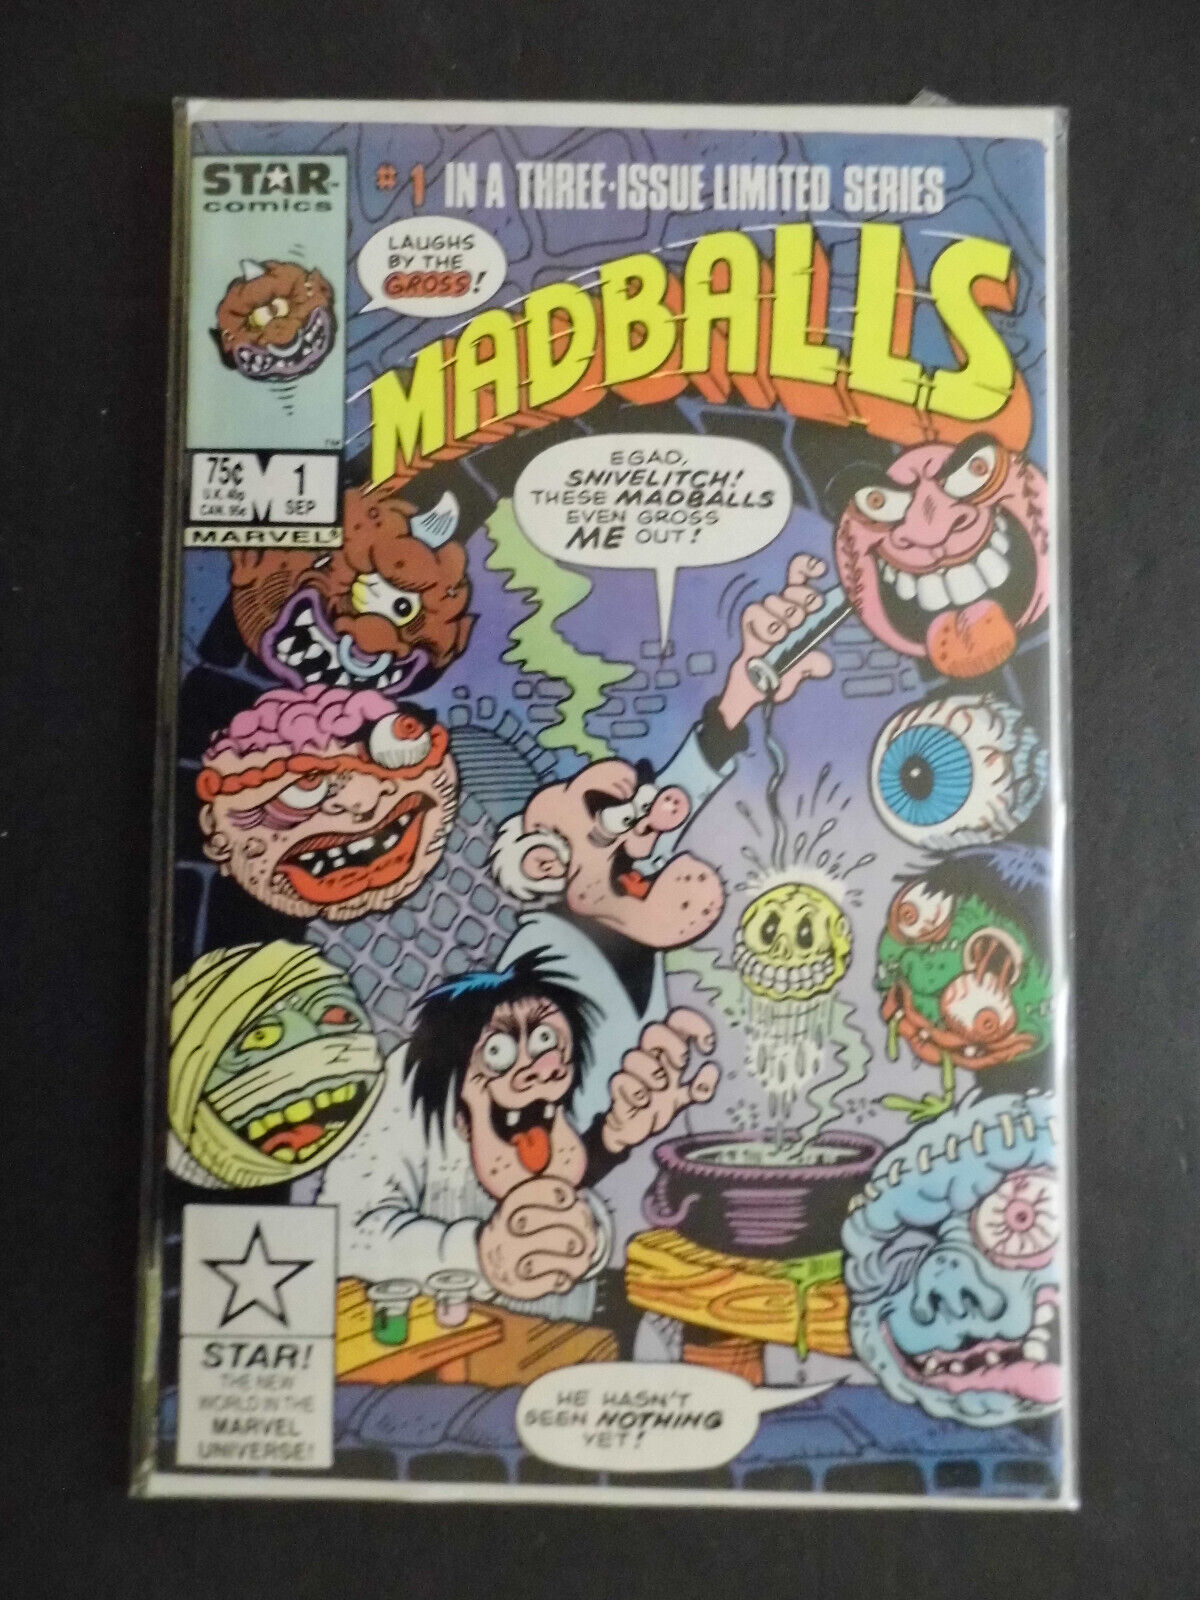 Madballs # 1 Marvel (Star Comic) 9/86 - VF-NM